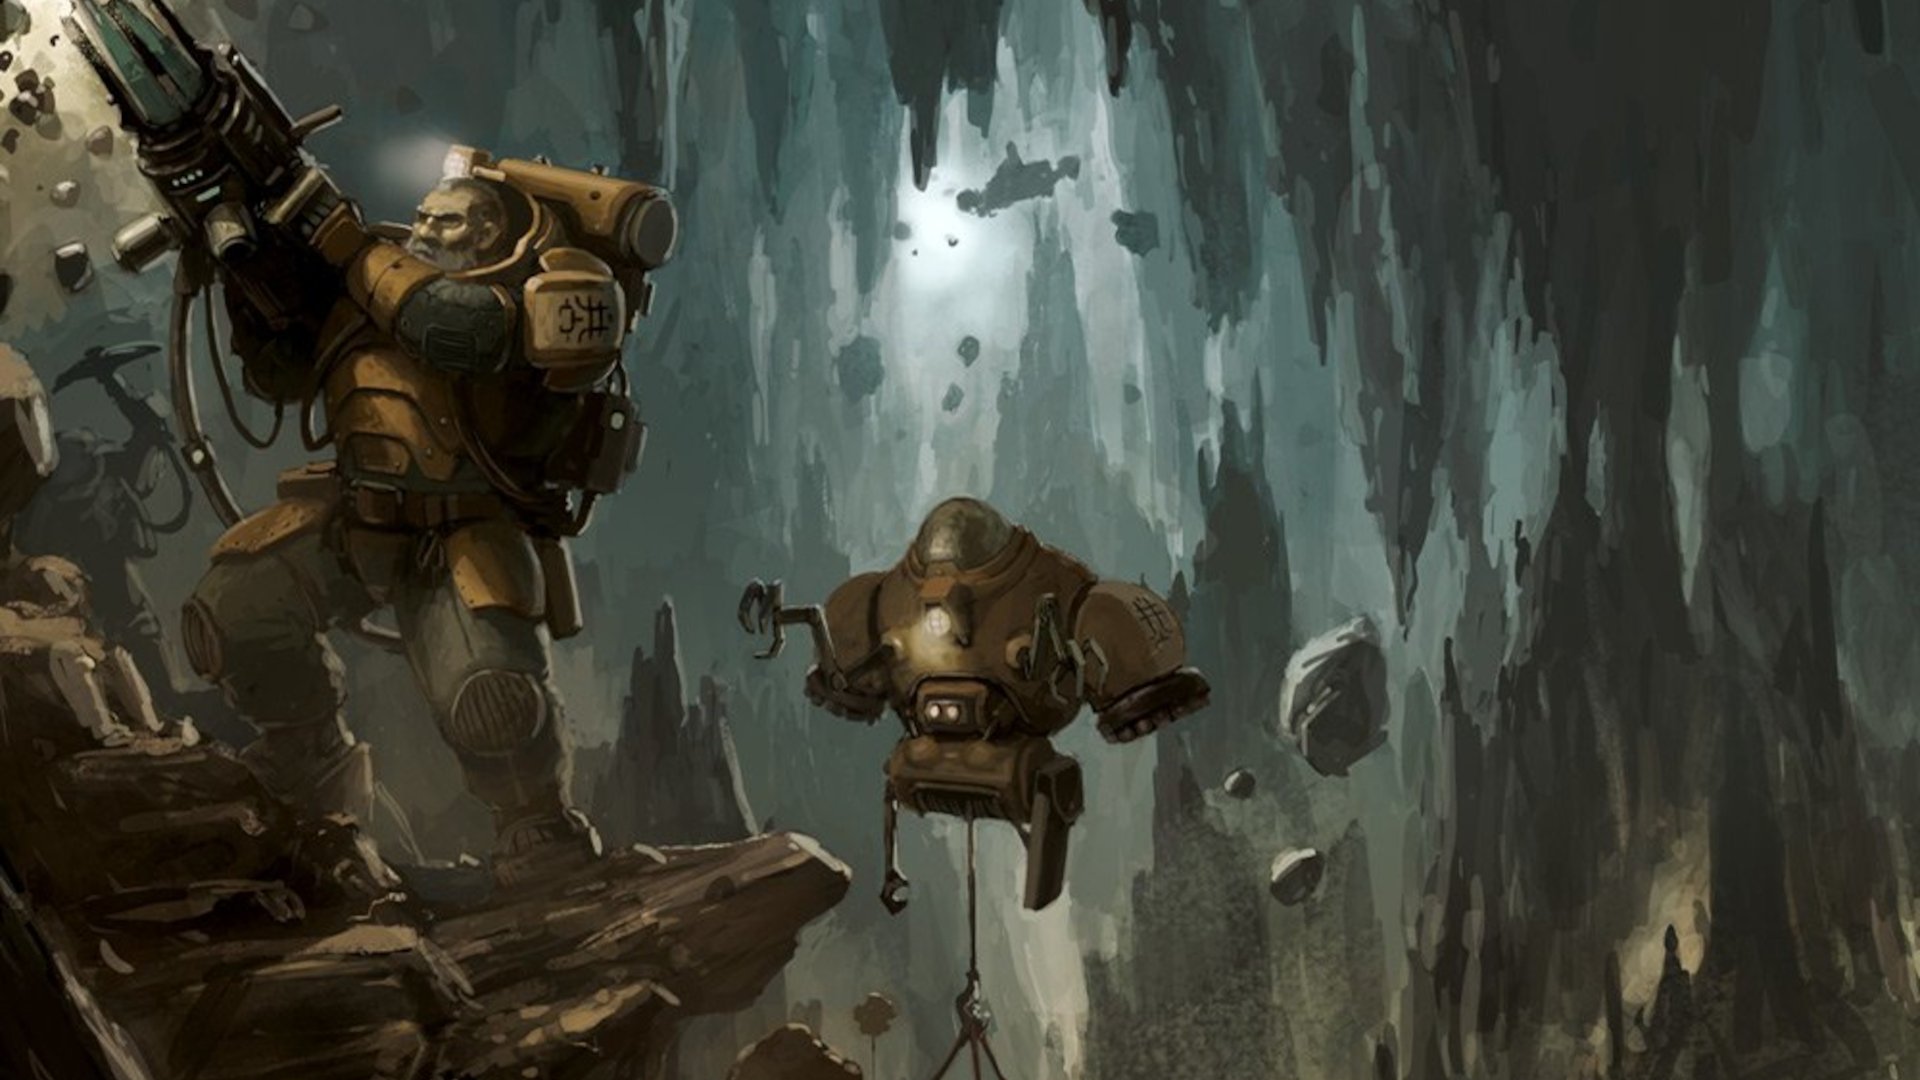 Warhammer 40k Leagues of Votann guide - Games Workshop artwork showing an ECOG in an asteroid mine